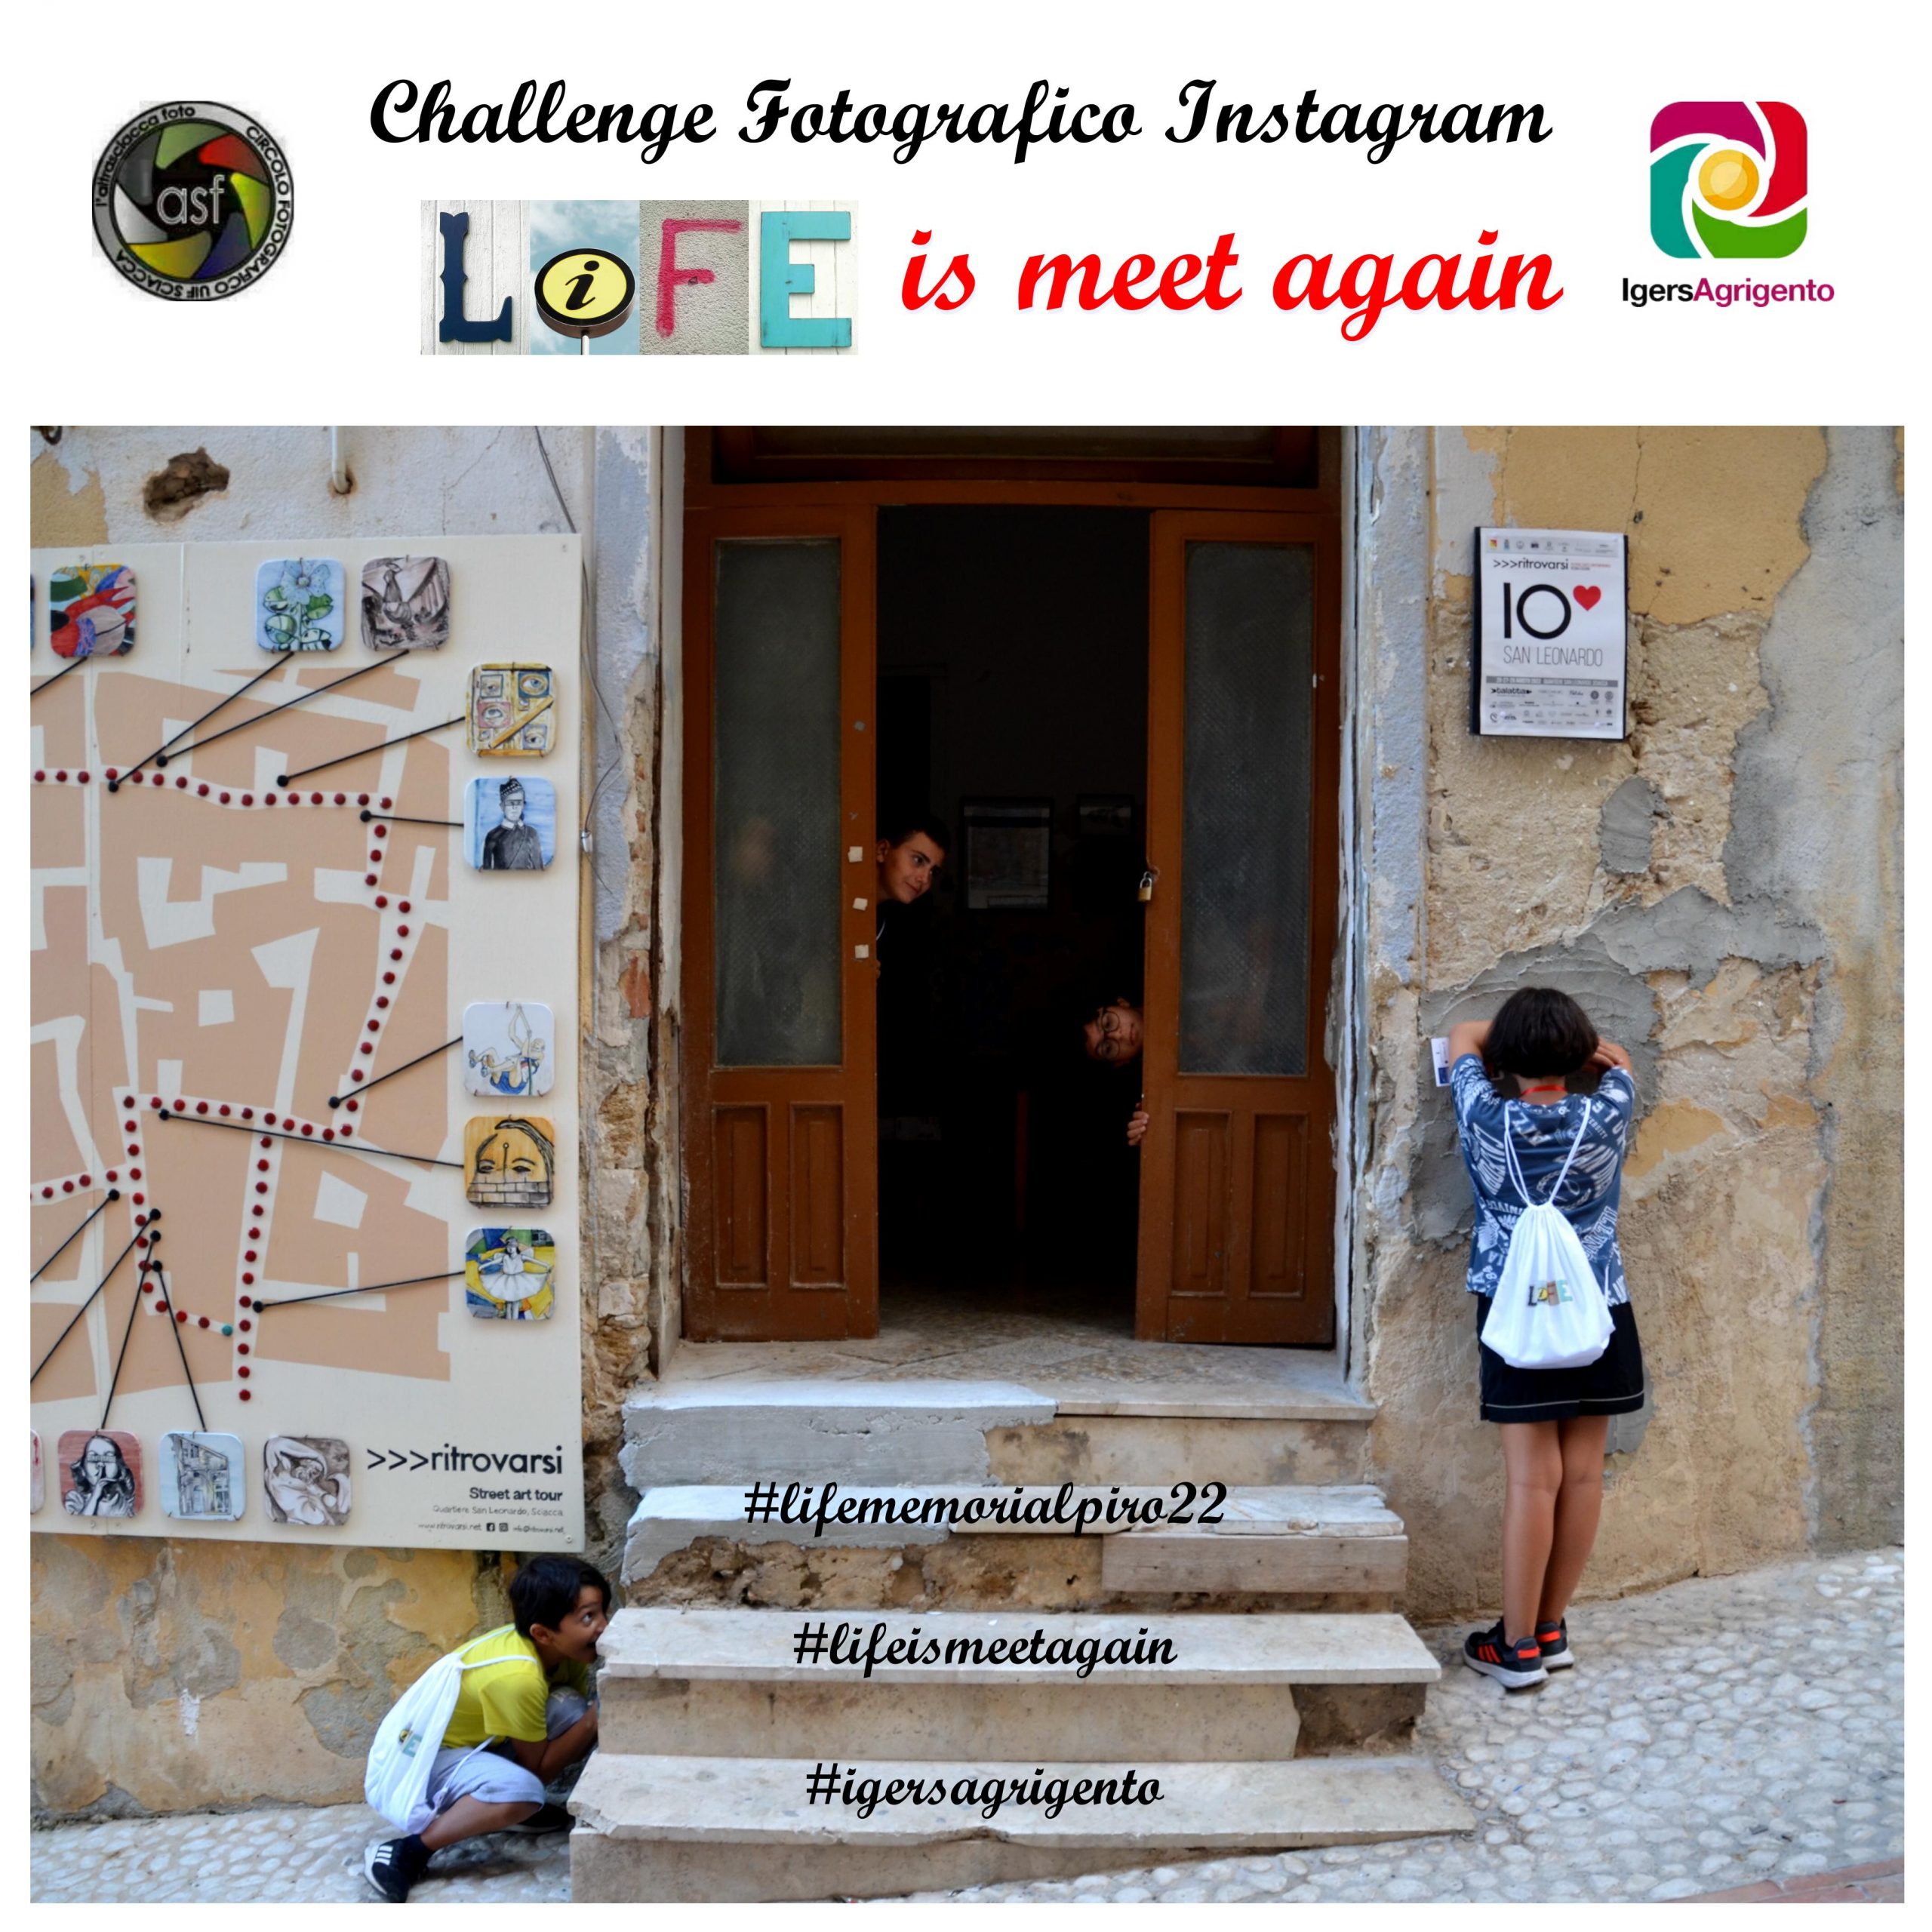 Challenge Fotografico Instagram “LIFE is meet again”